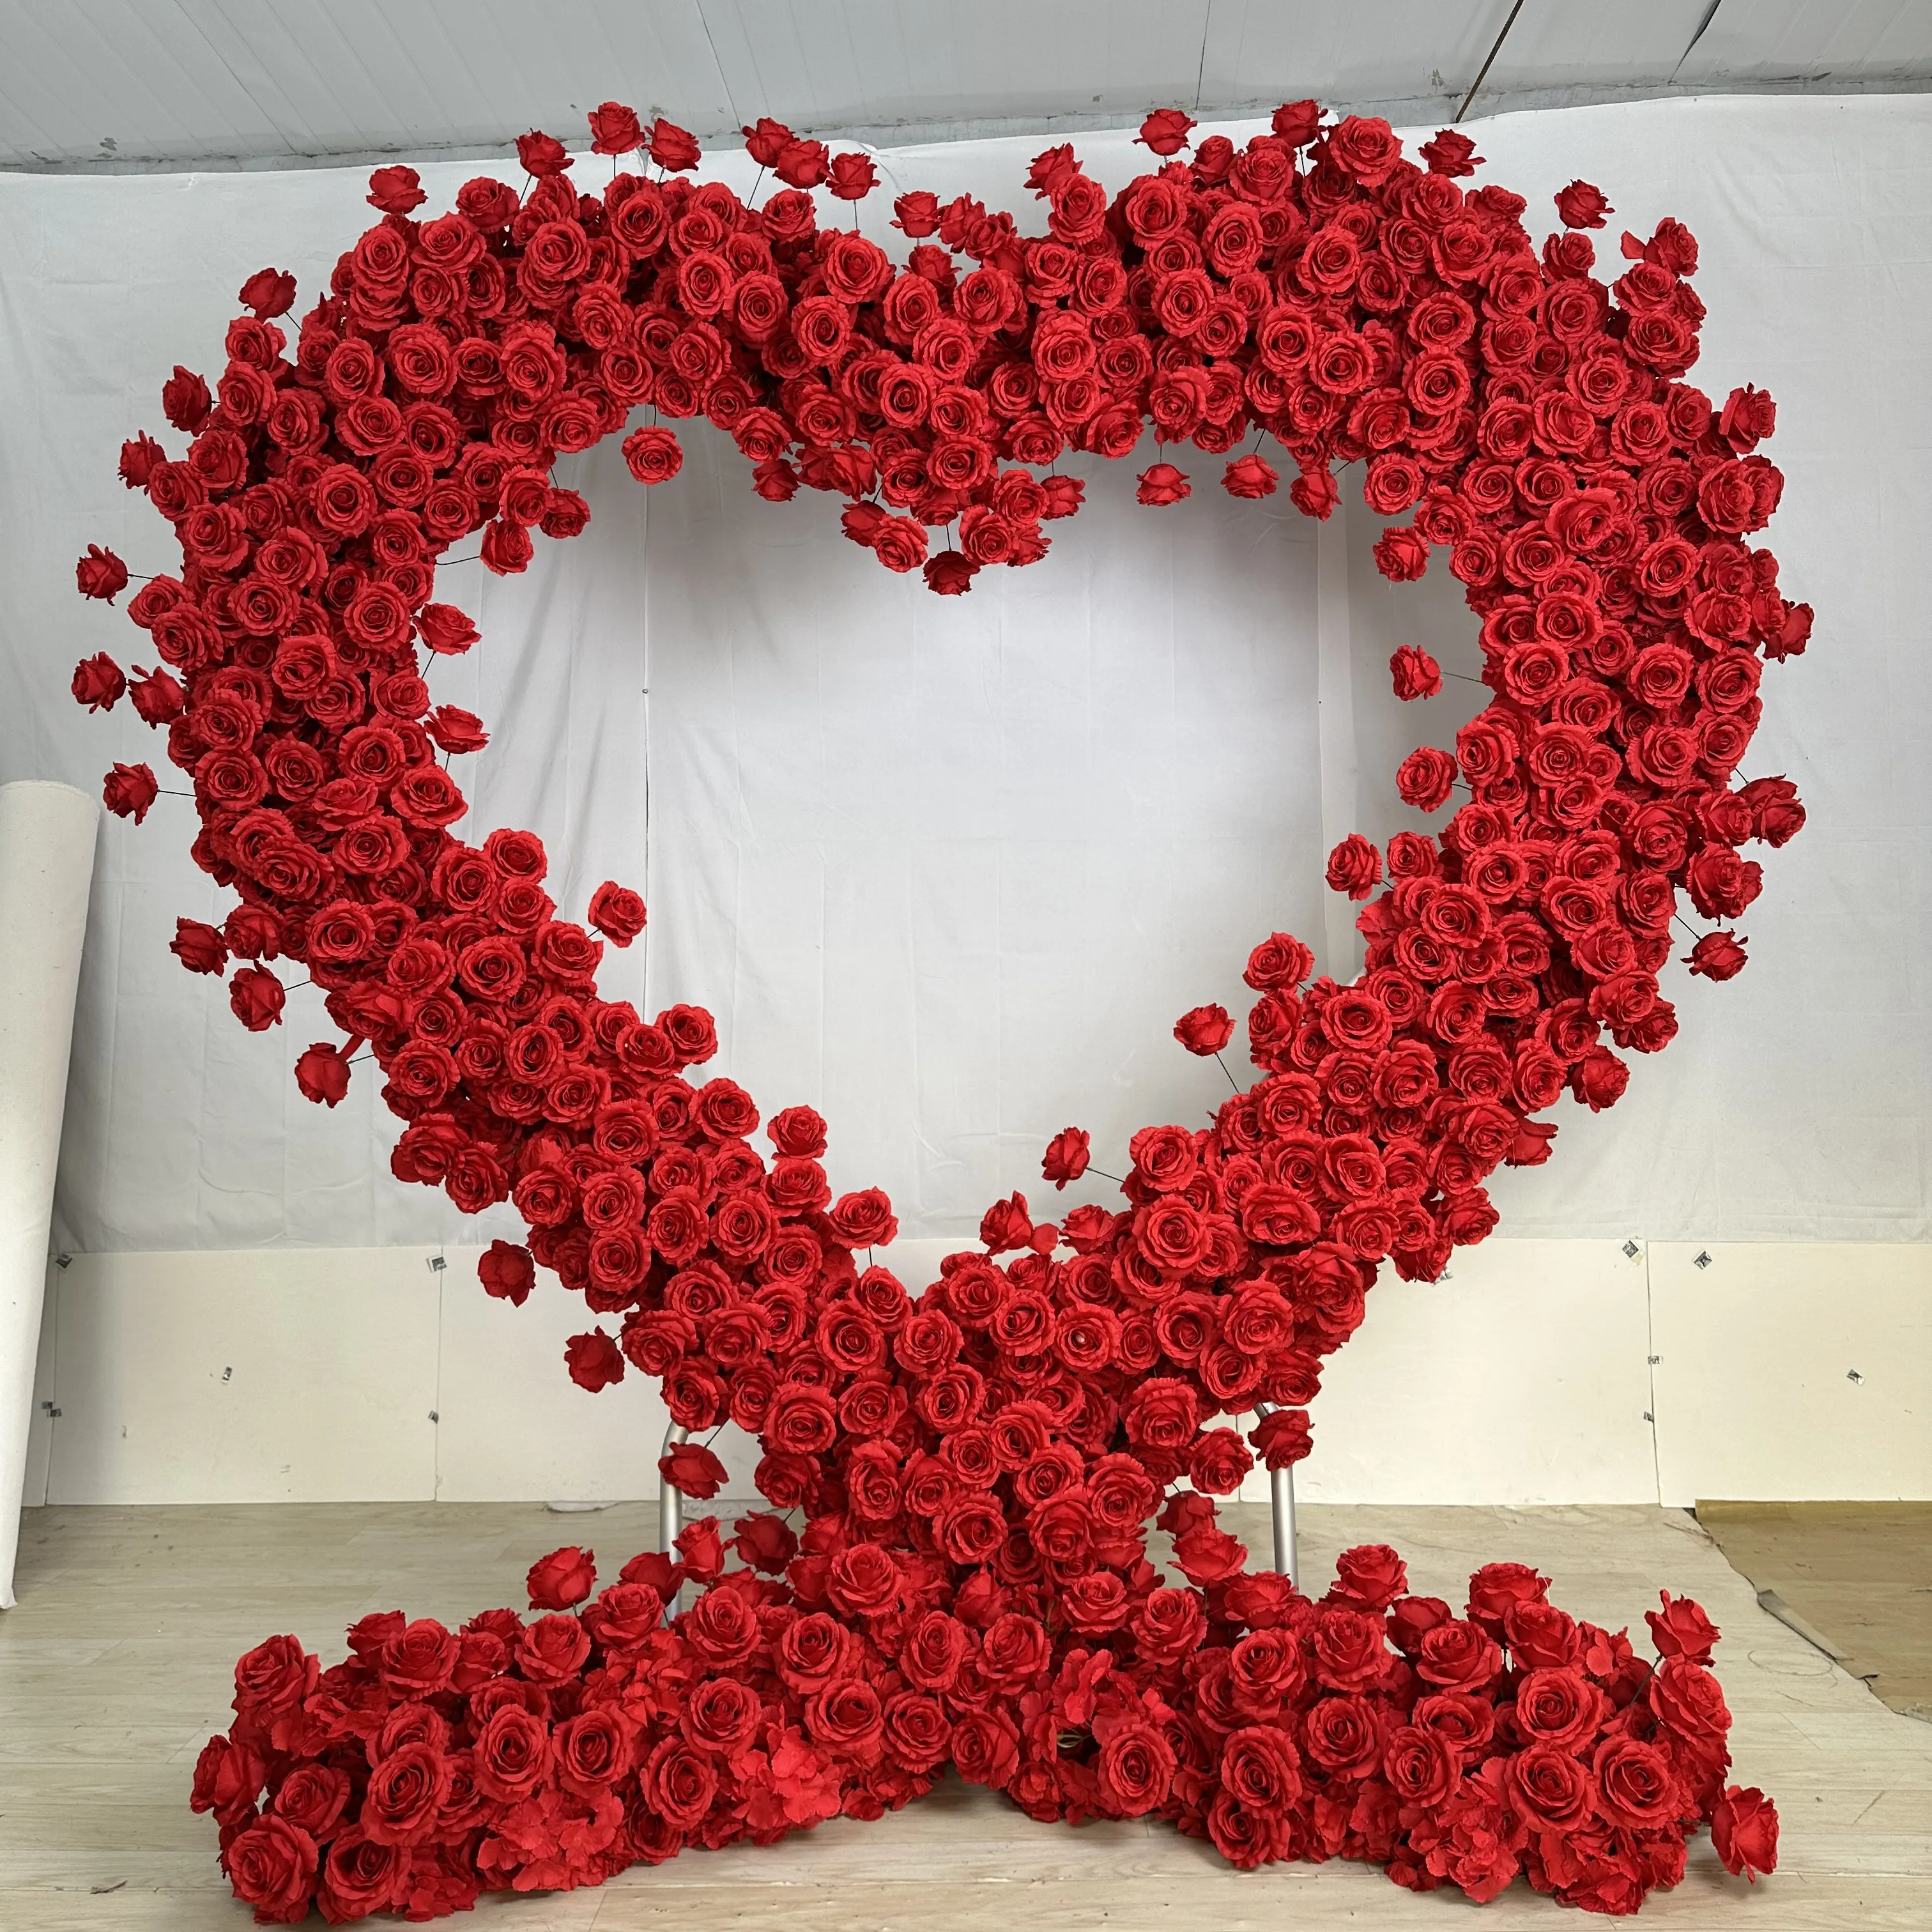 A-FHA003 도매 인공 빨간 꽃 아치 심장 모양의 꽃 아치 결혼식 아치 꽃 배경 장식